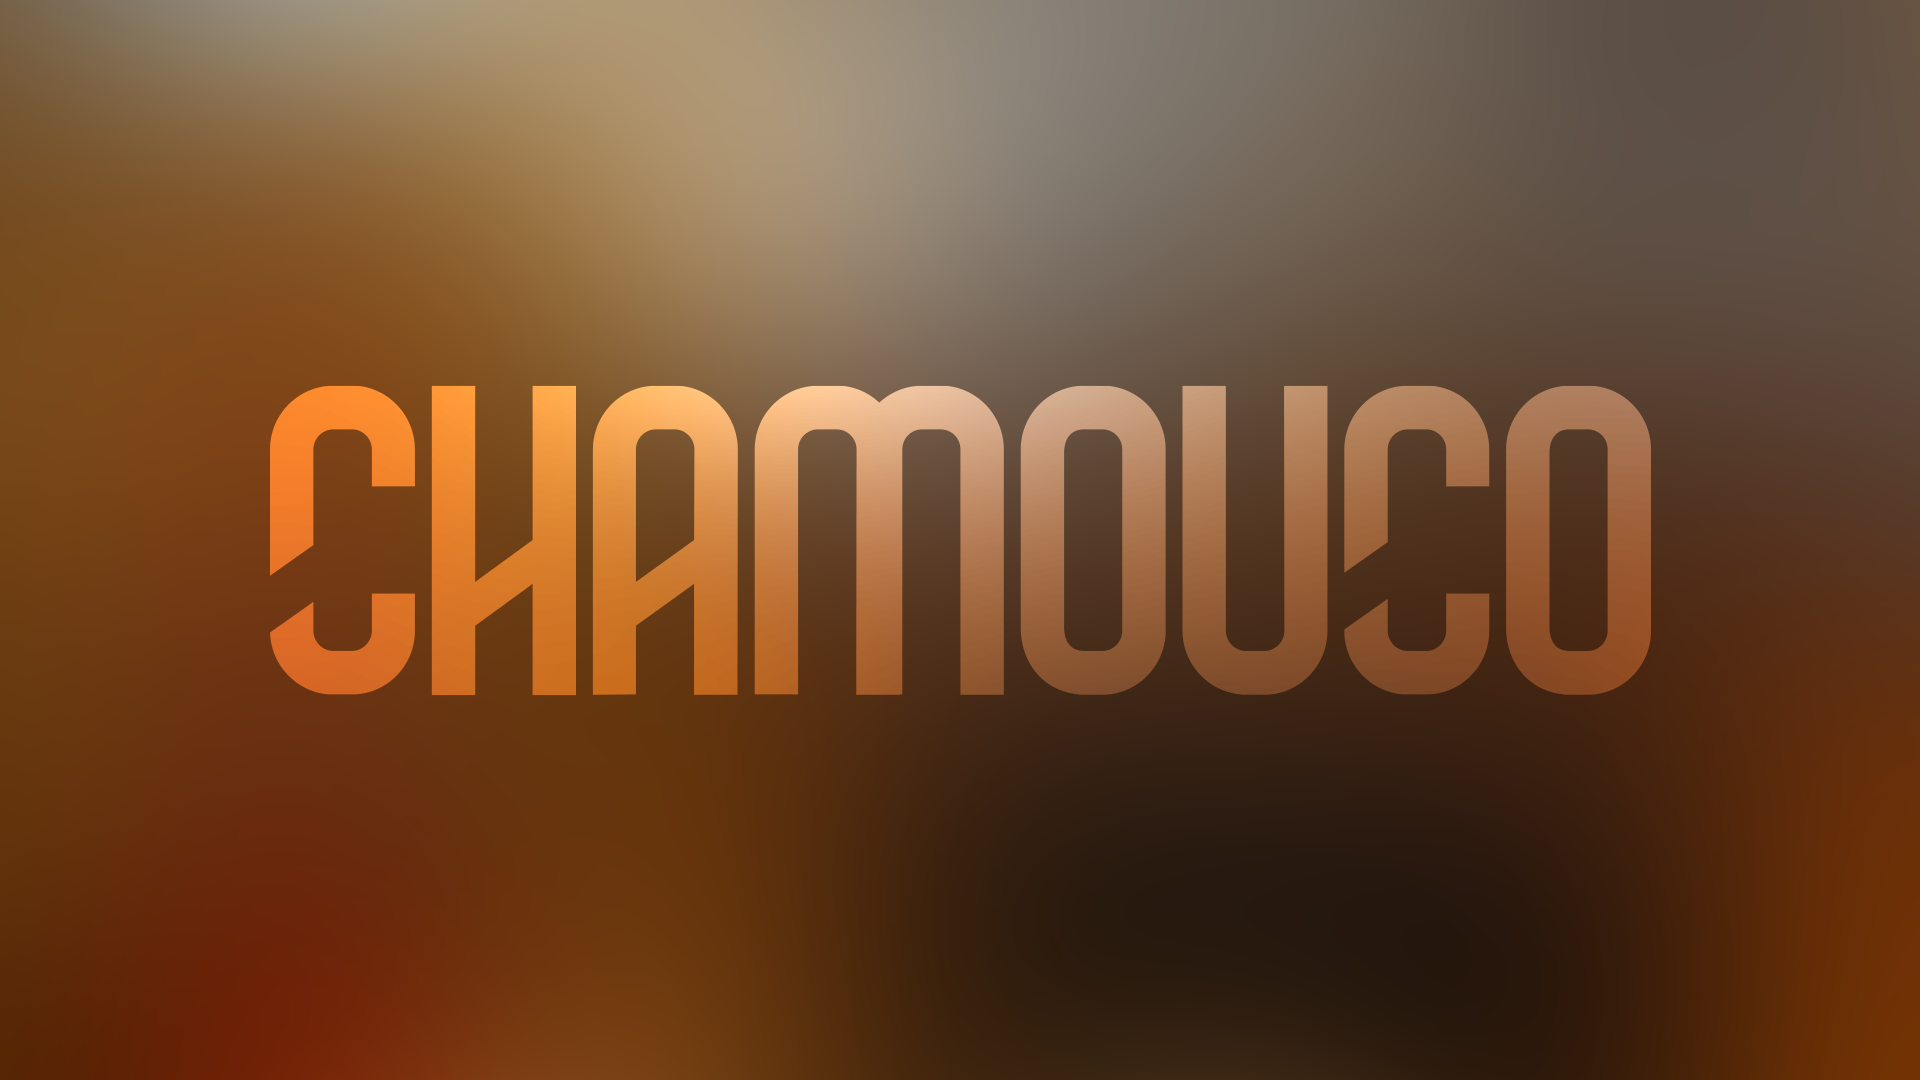 Nueva imagen Chamouco